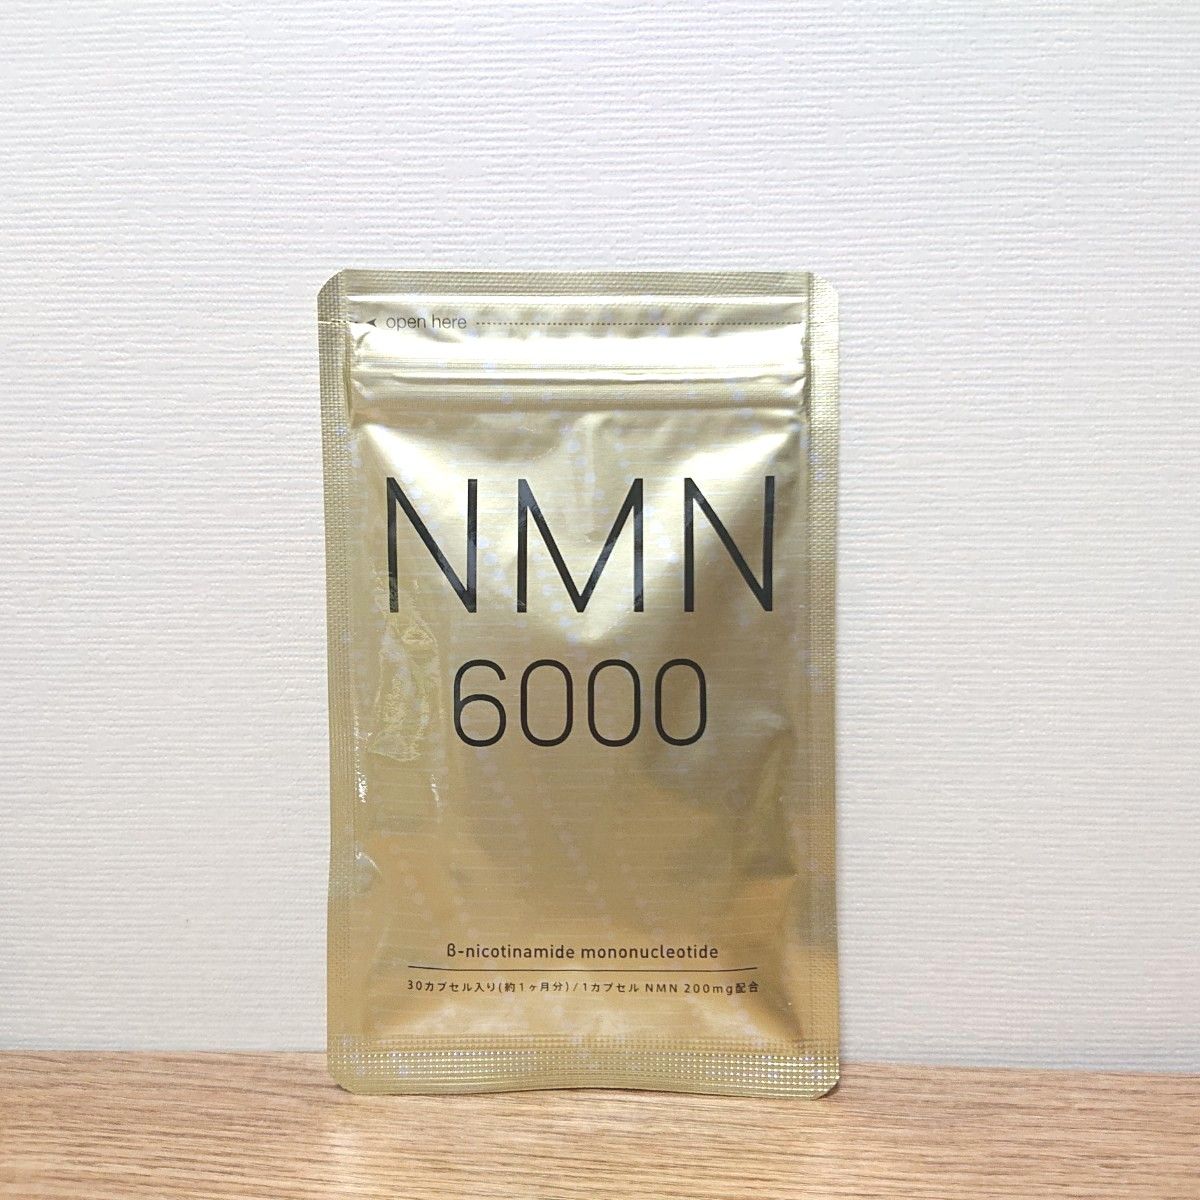 www.haoming.jp - NMN 6000 6ヶ月分 ニコチンアミドモノヌクレオチド